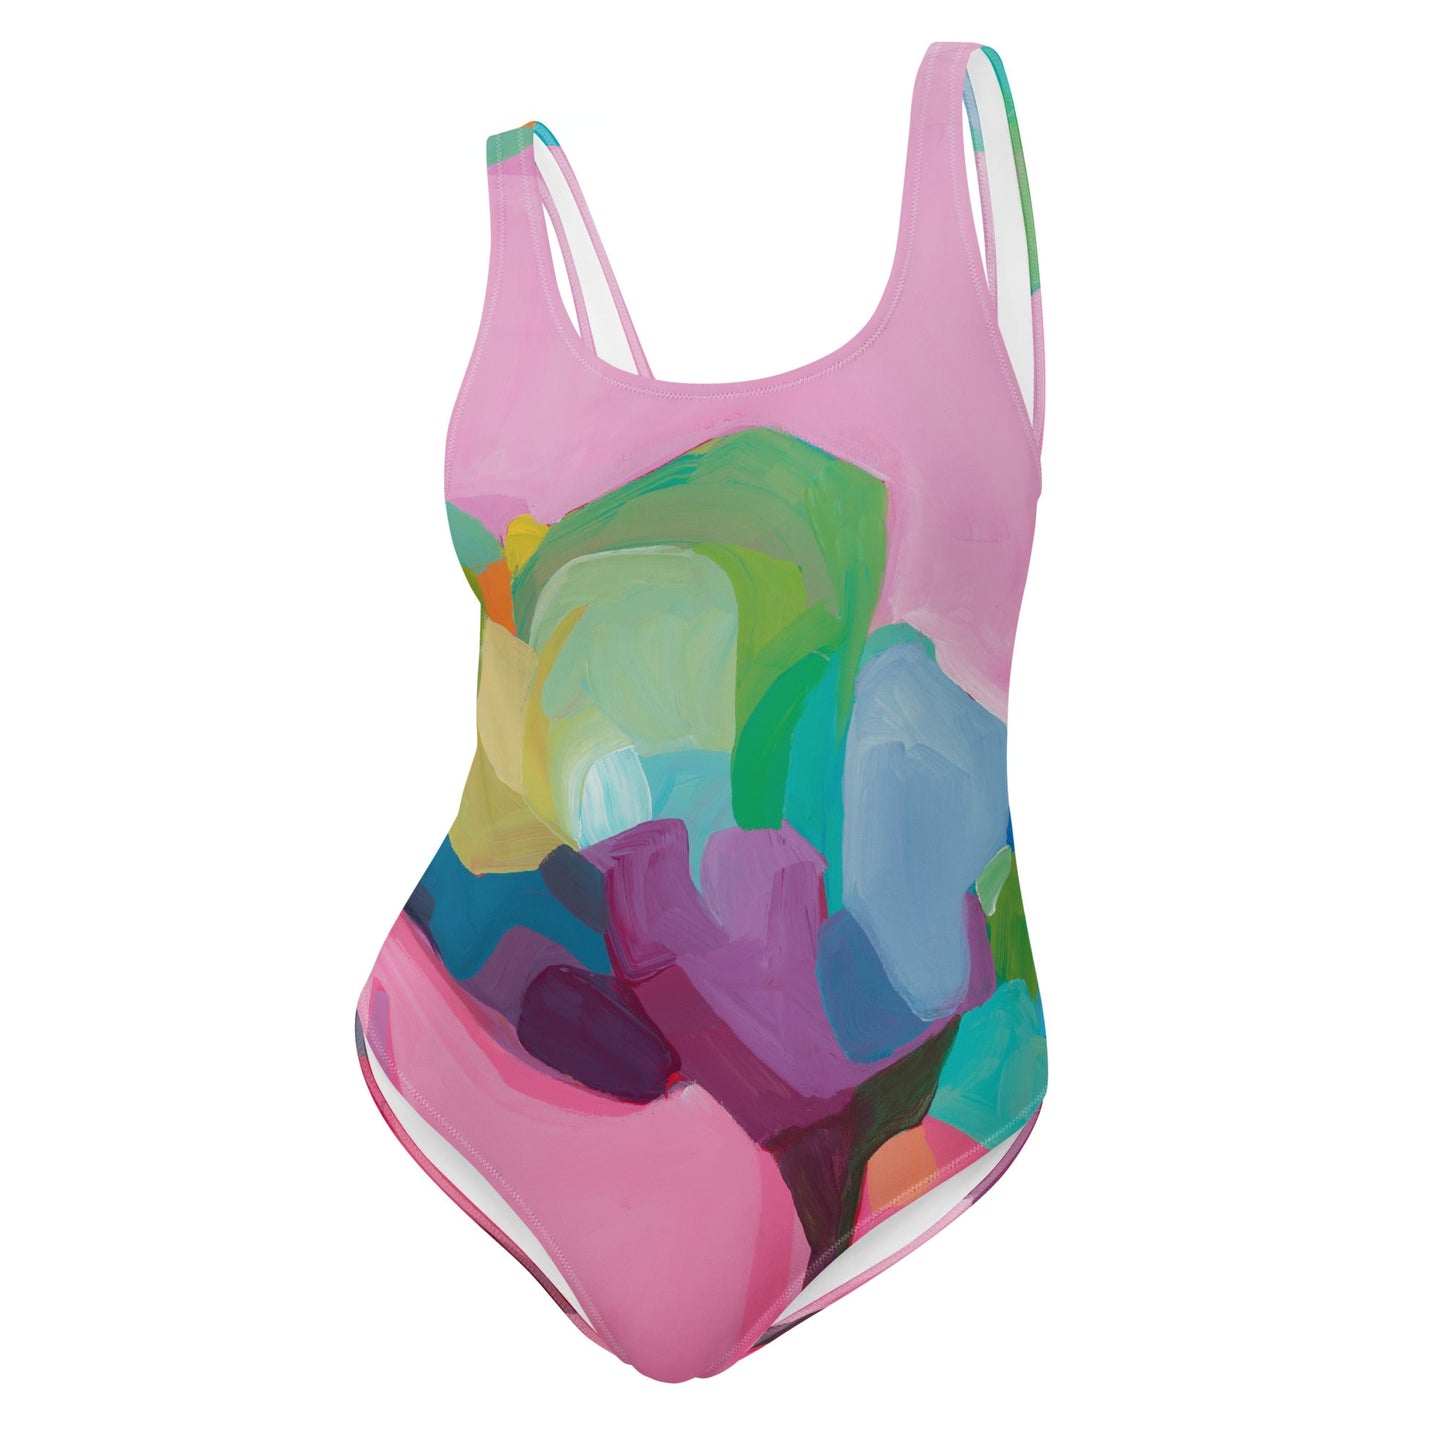 Candy Pink One-Piece Swimsuit - Milpali Swimwear